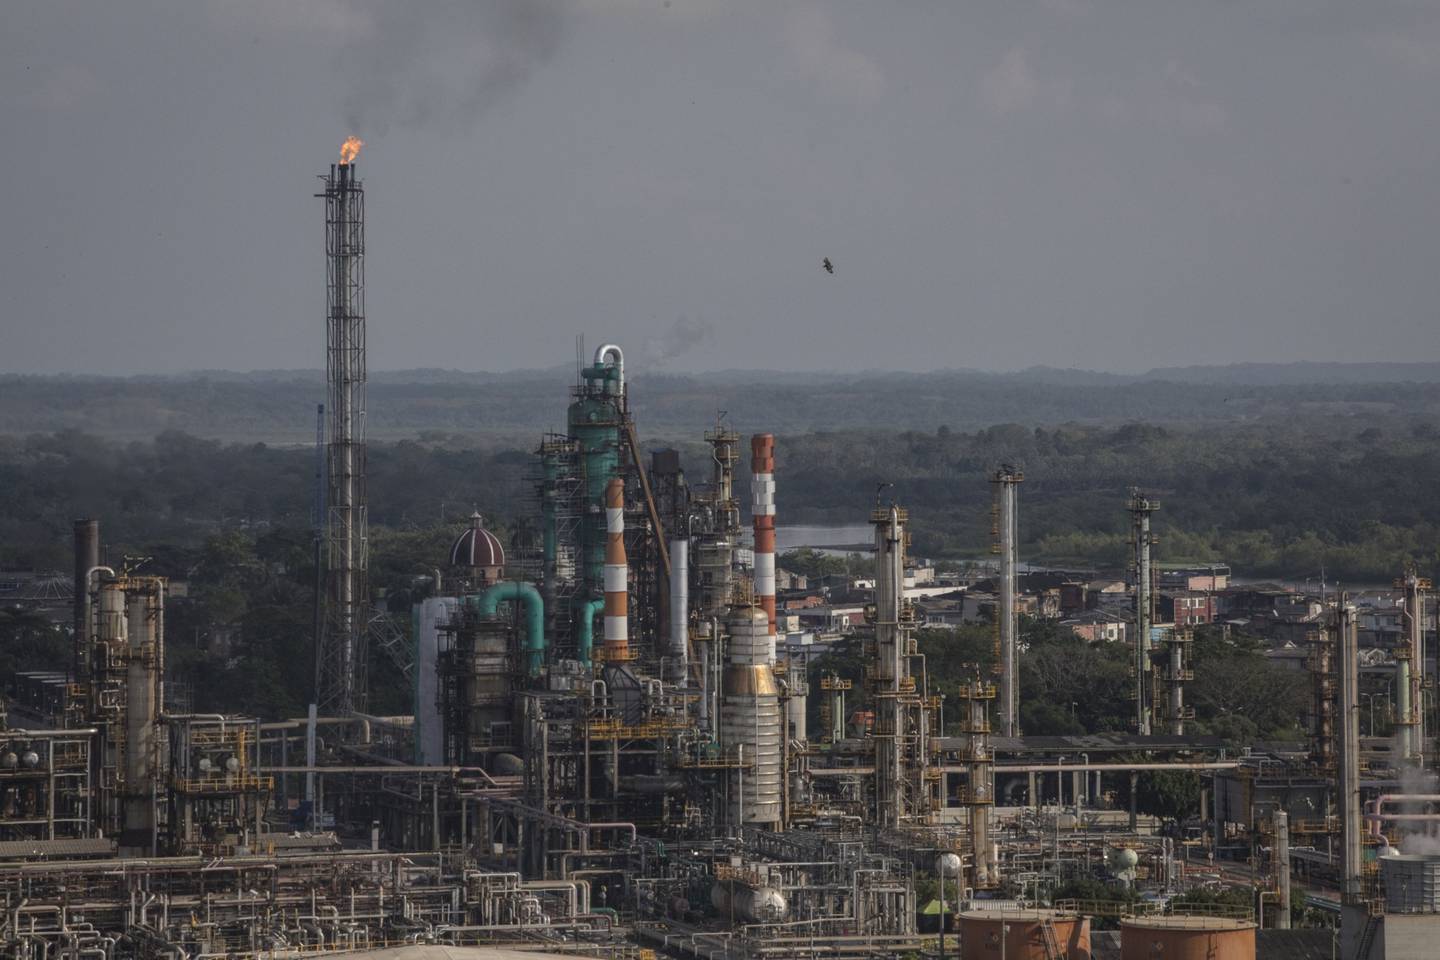 Ecopetrol's refinery in Barrancabermeja, Colombia.